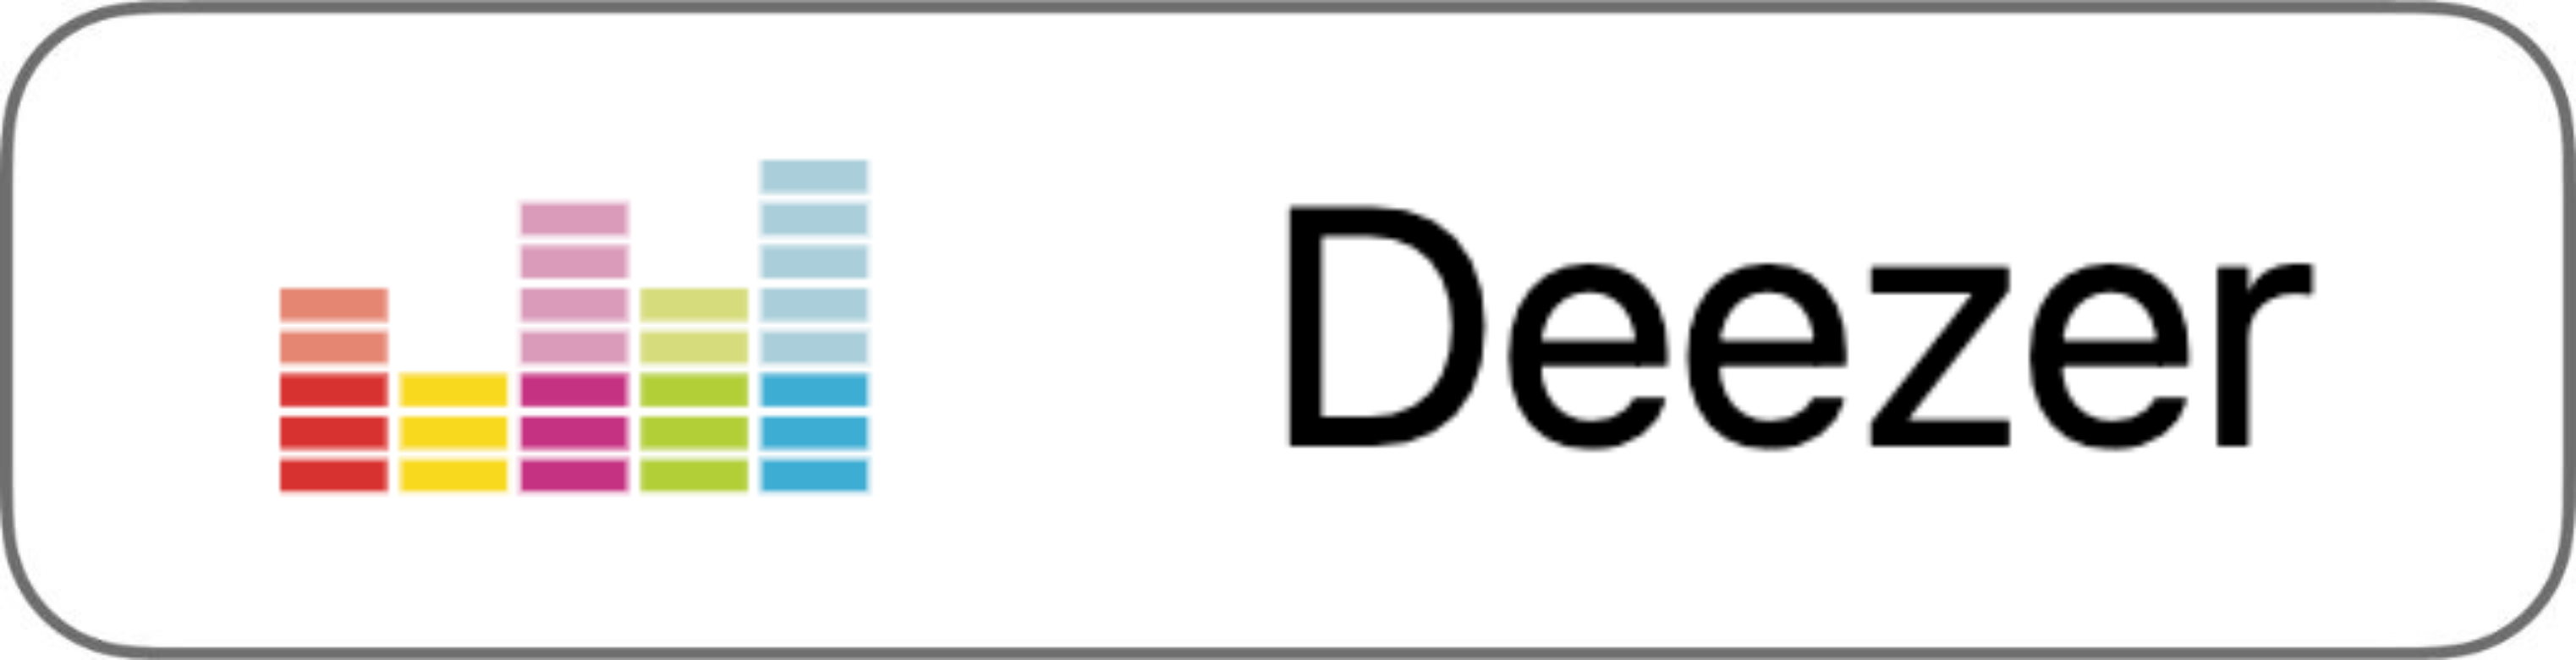 Deezer - The Employee Advocacy & Influence Podcast by DSMN8